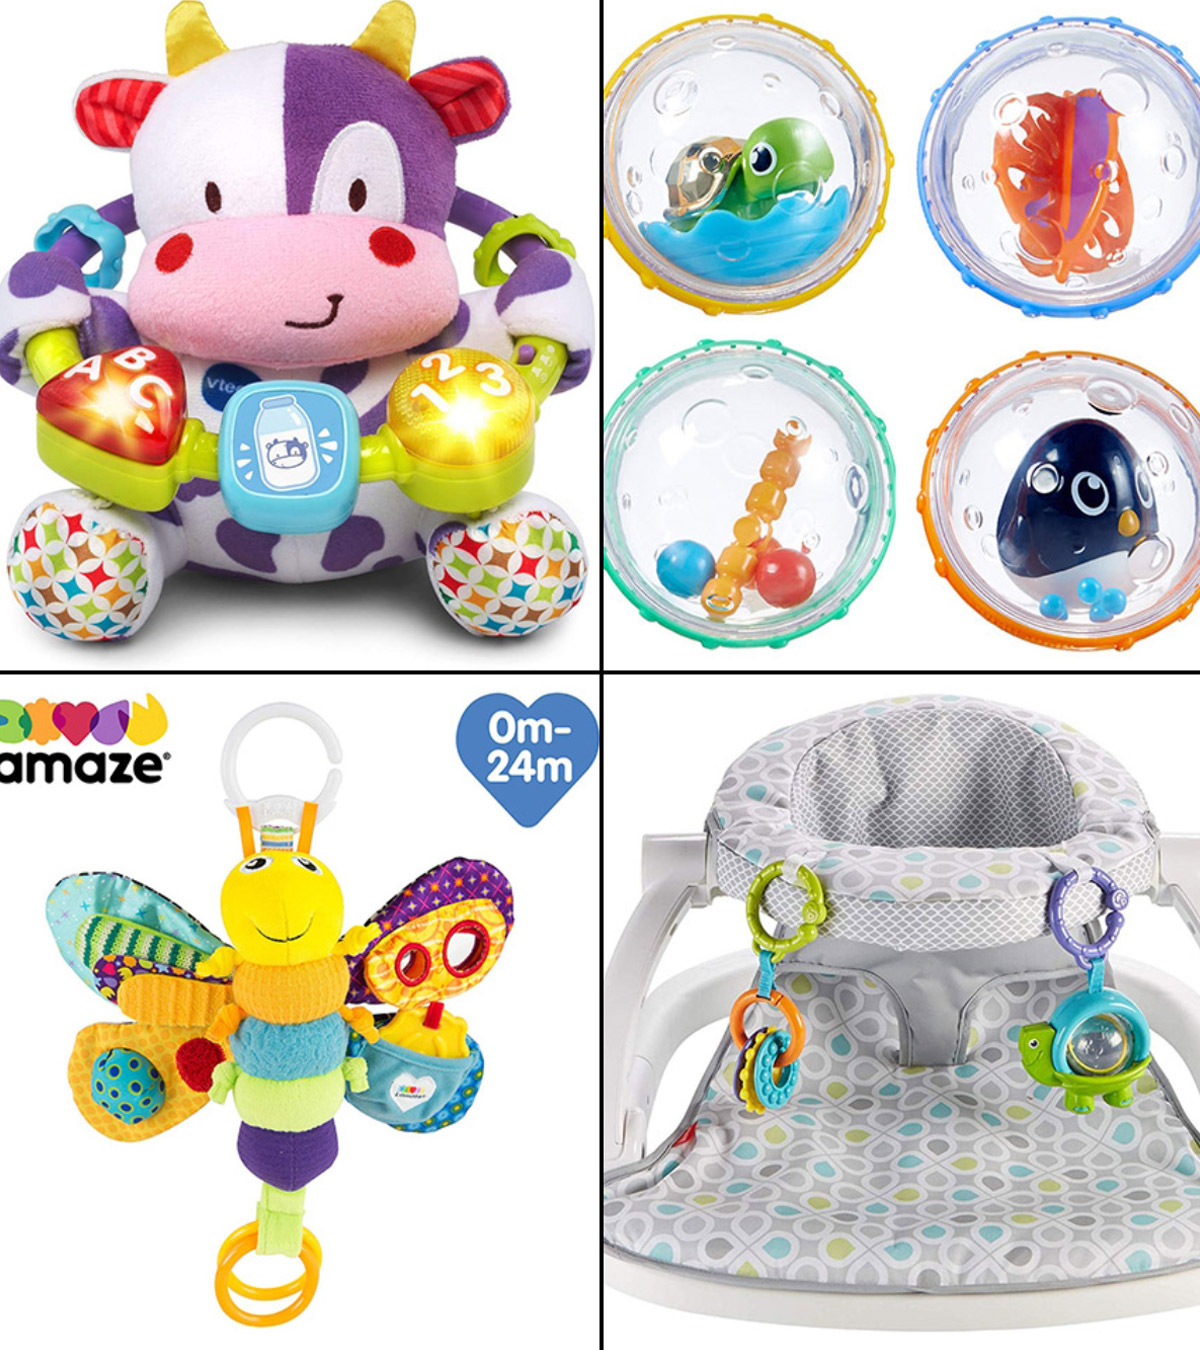 https://www.momjunction.com/wp-content/uploads/2015/04/Best-Toys-For-4-Month-Olds-In.jpg